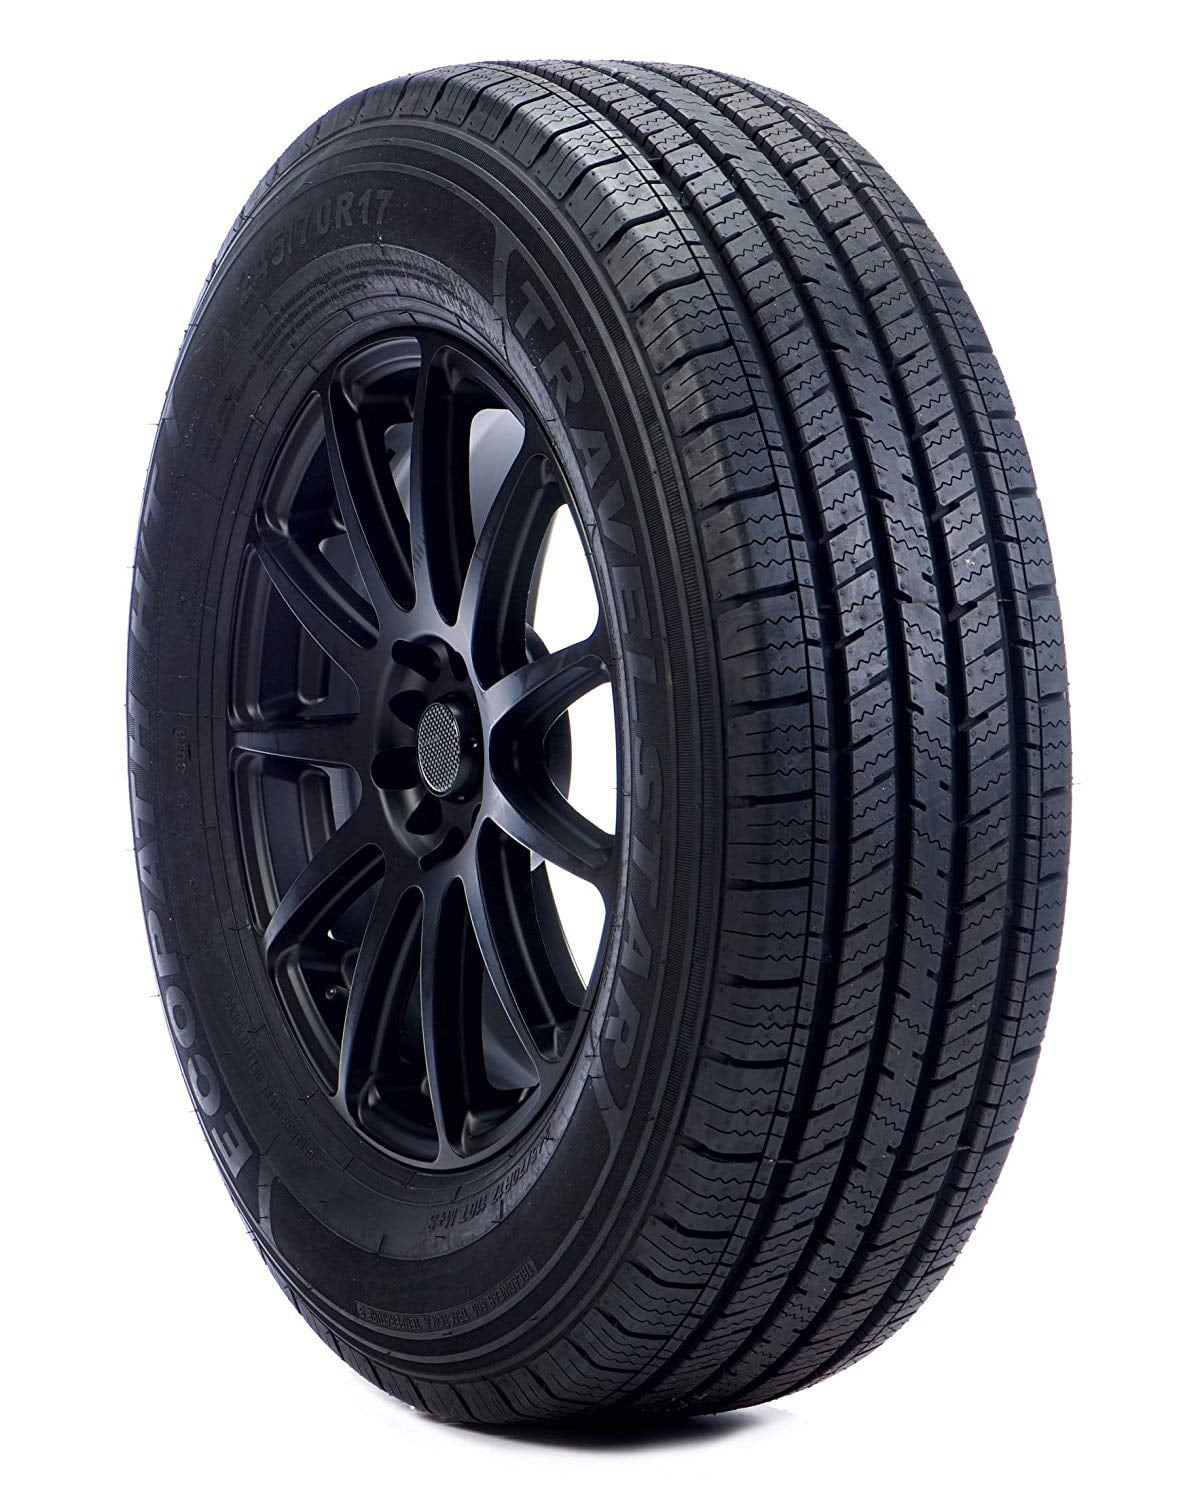 Season Radial Tire-LT265/75R16 123R 10-ply Travelstar EcoPath H/T All 